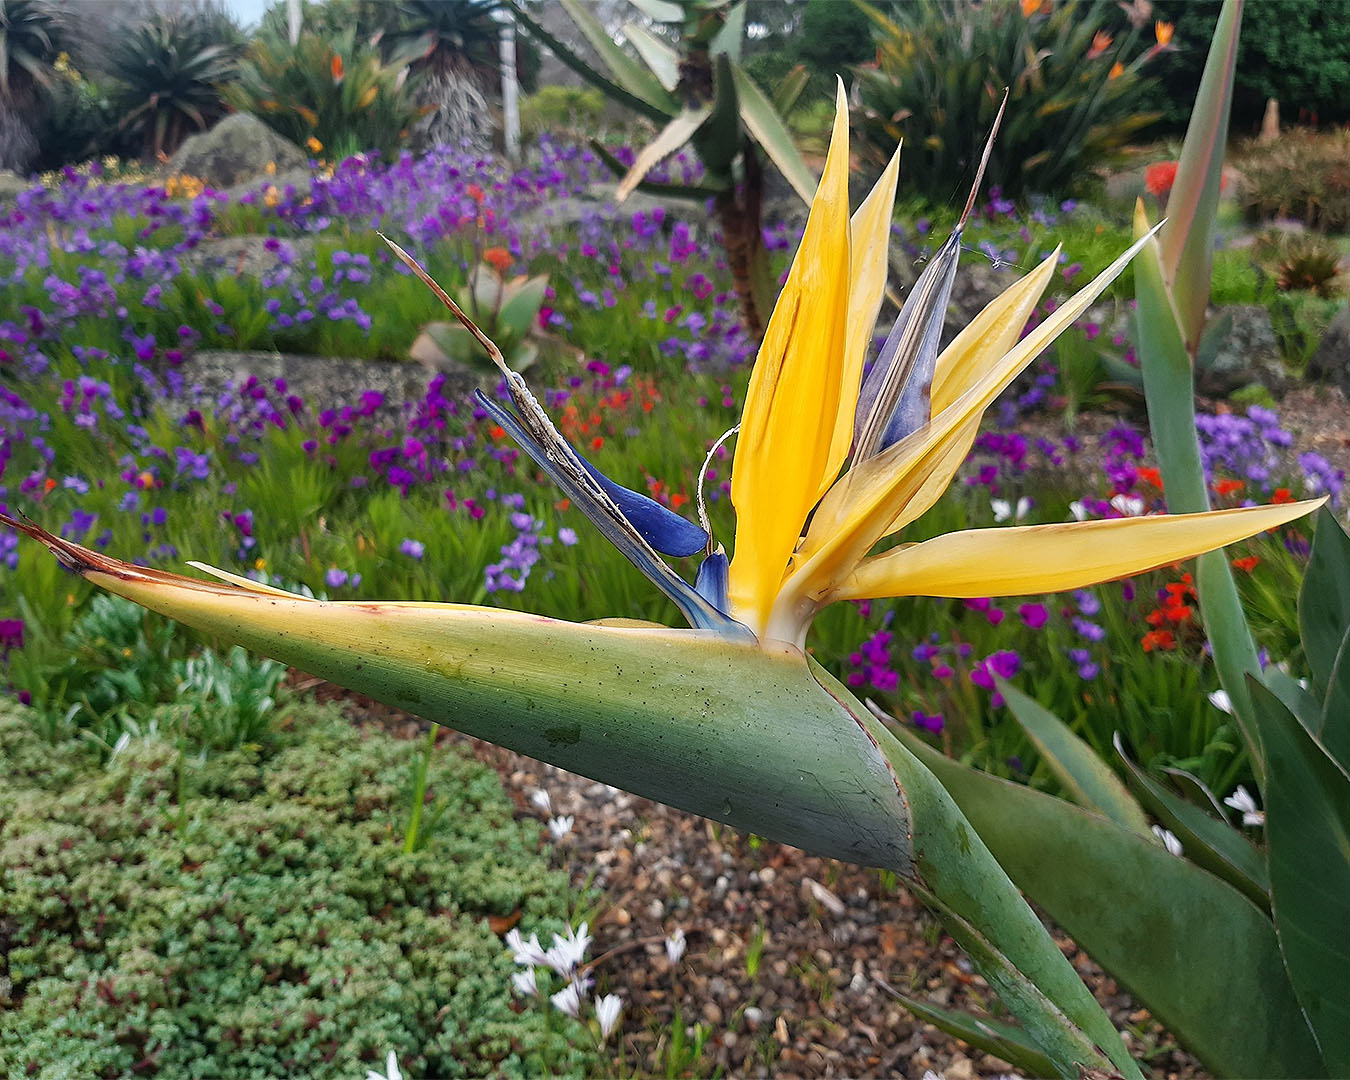 ‘Mandela’s Gold’ bird of paradise (Strelitzia reginae ‘Mandela’s Gold’) in the African Garden at Auckland Botanic Gardens, set against a rainbow carpet of spring-flowering bulbs